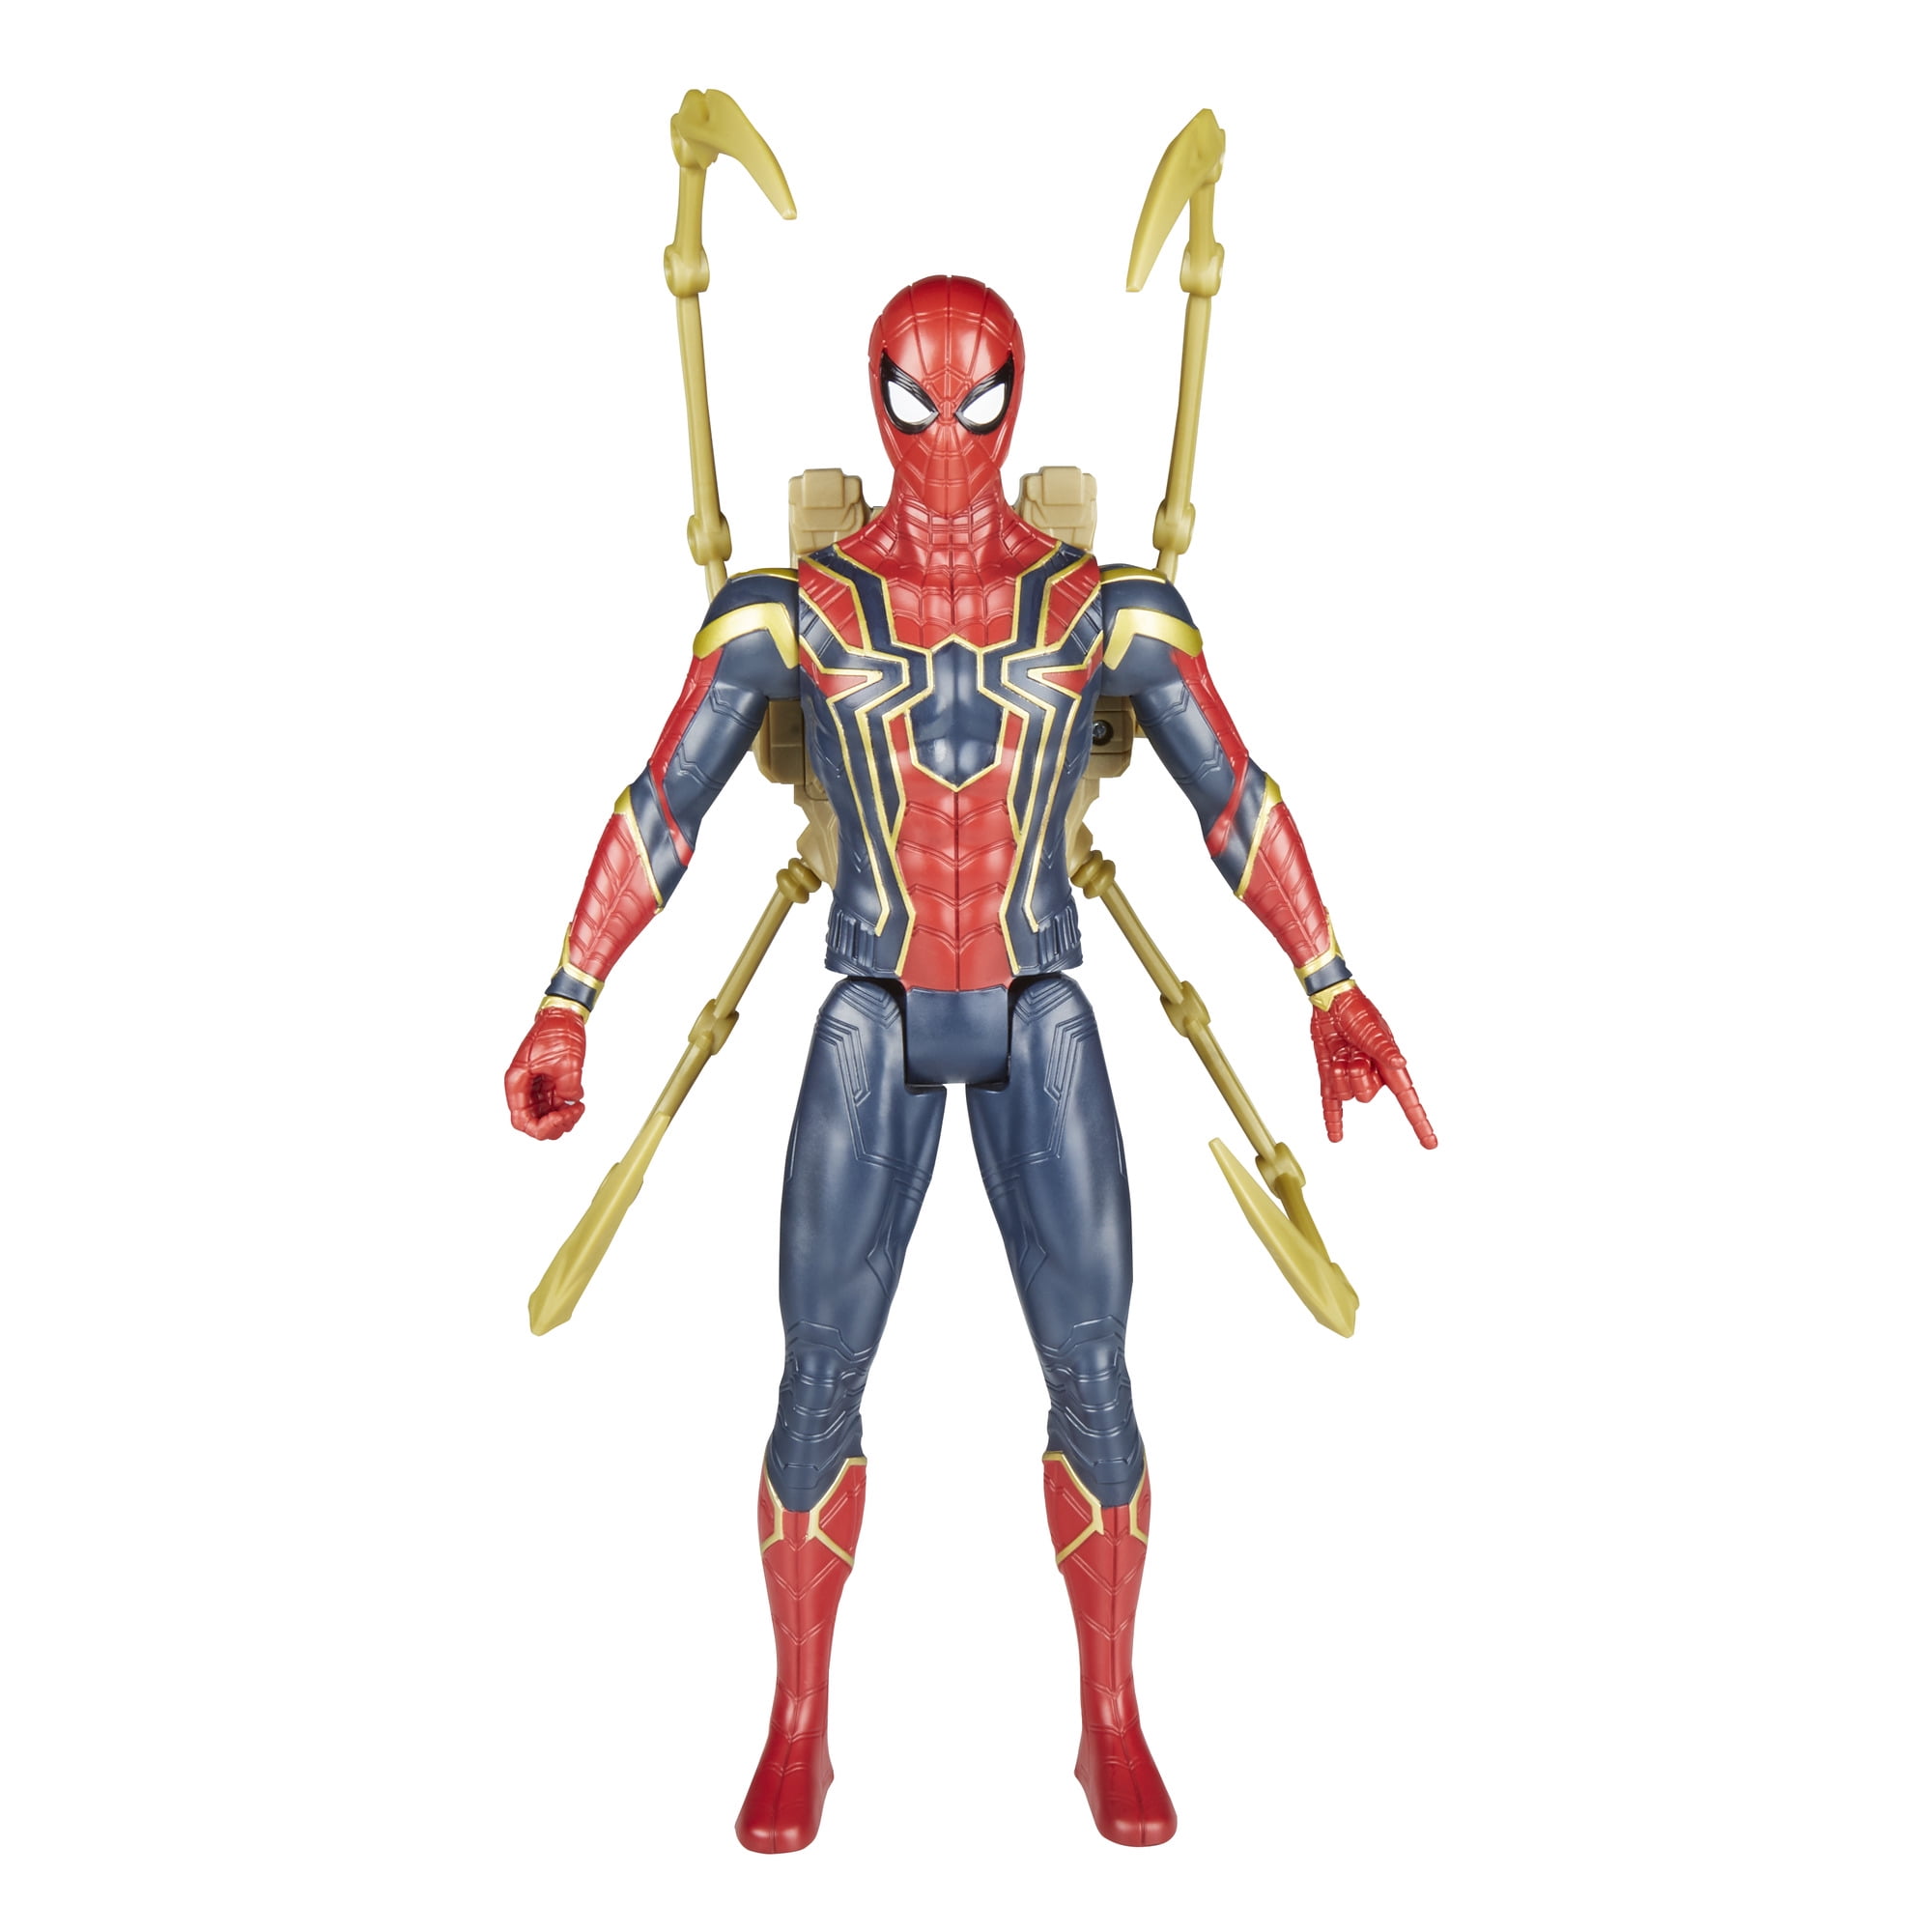 Marvel Avengers Infinity War Titan Hero Series Iron Spider Power FX Port Figure 